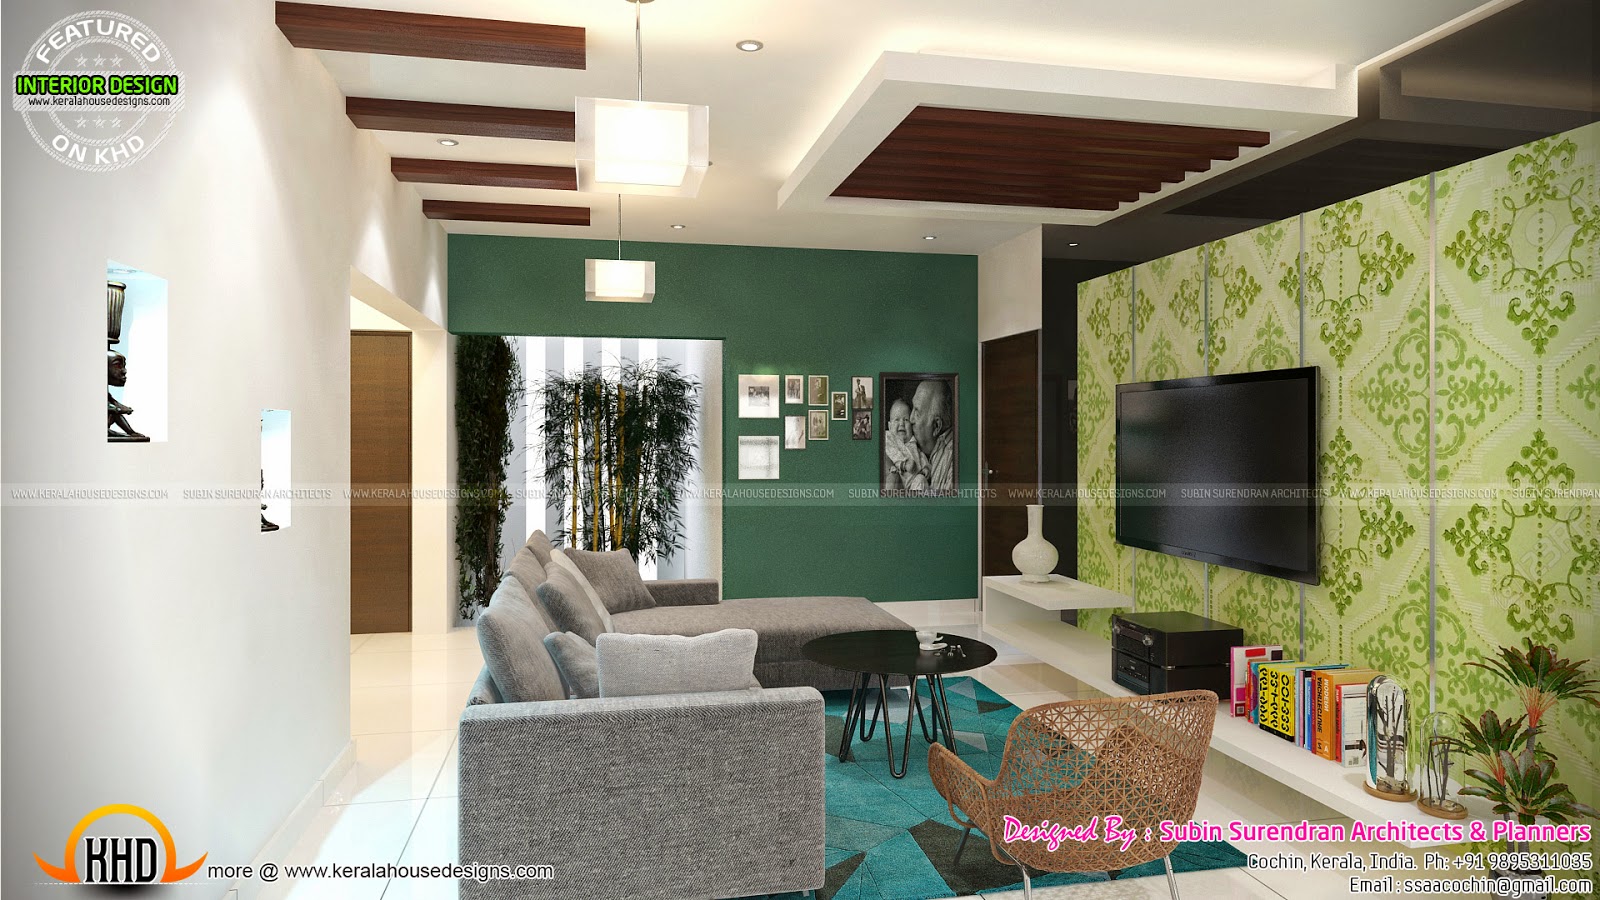 TV room, living, bedroom, kitchen interior - Kerala home design and